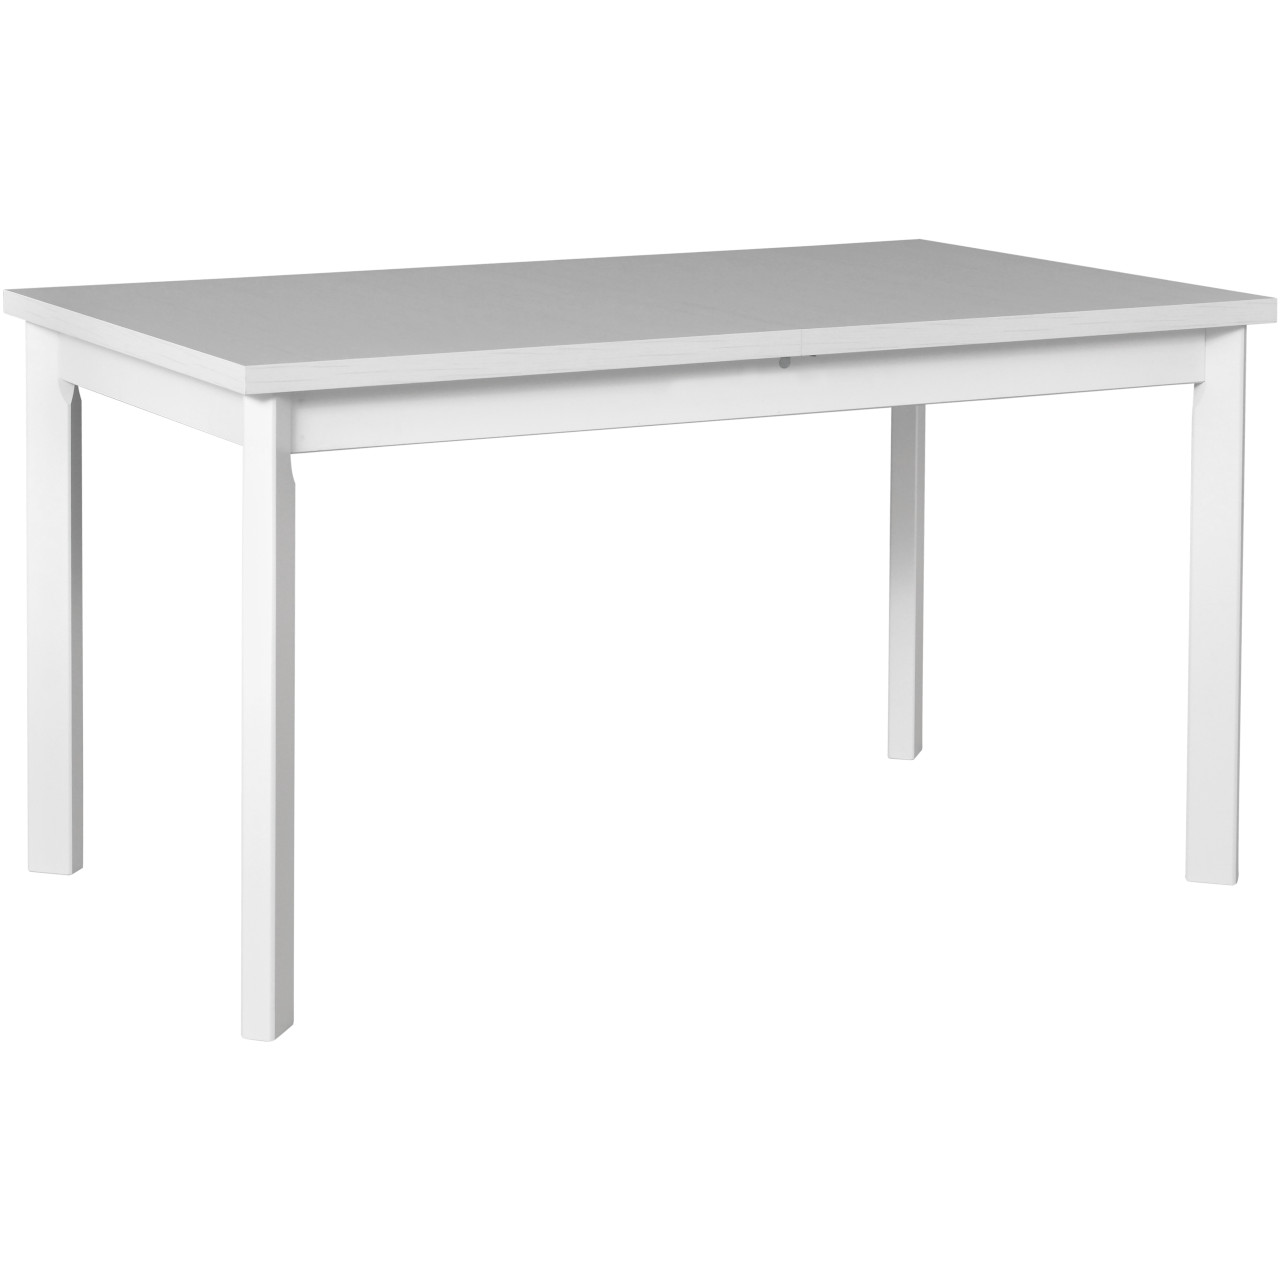 Table MAX 5 P 80x120/150 white laminate